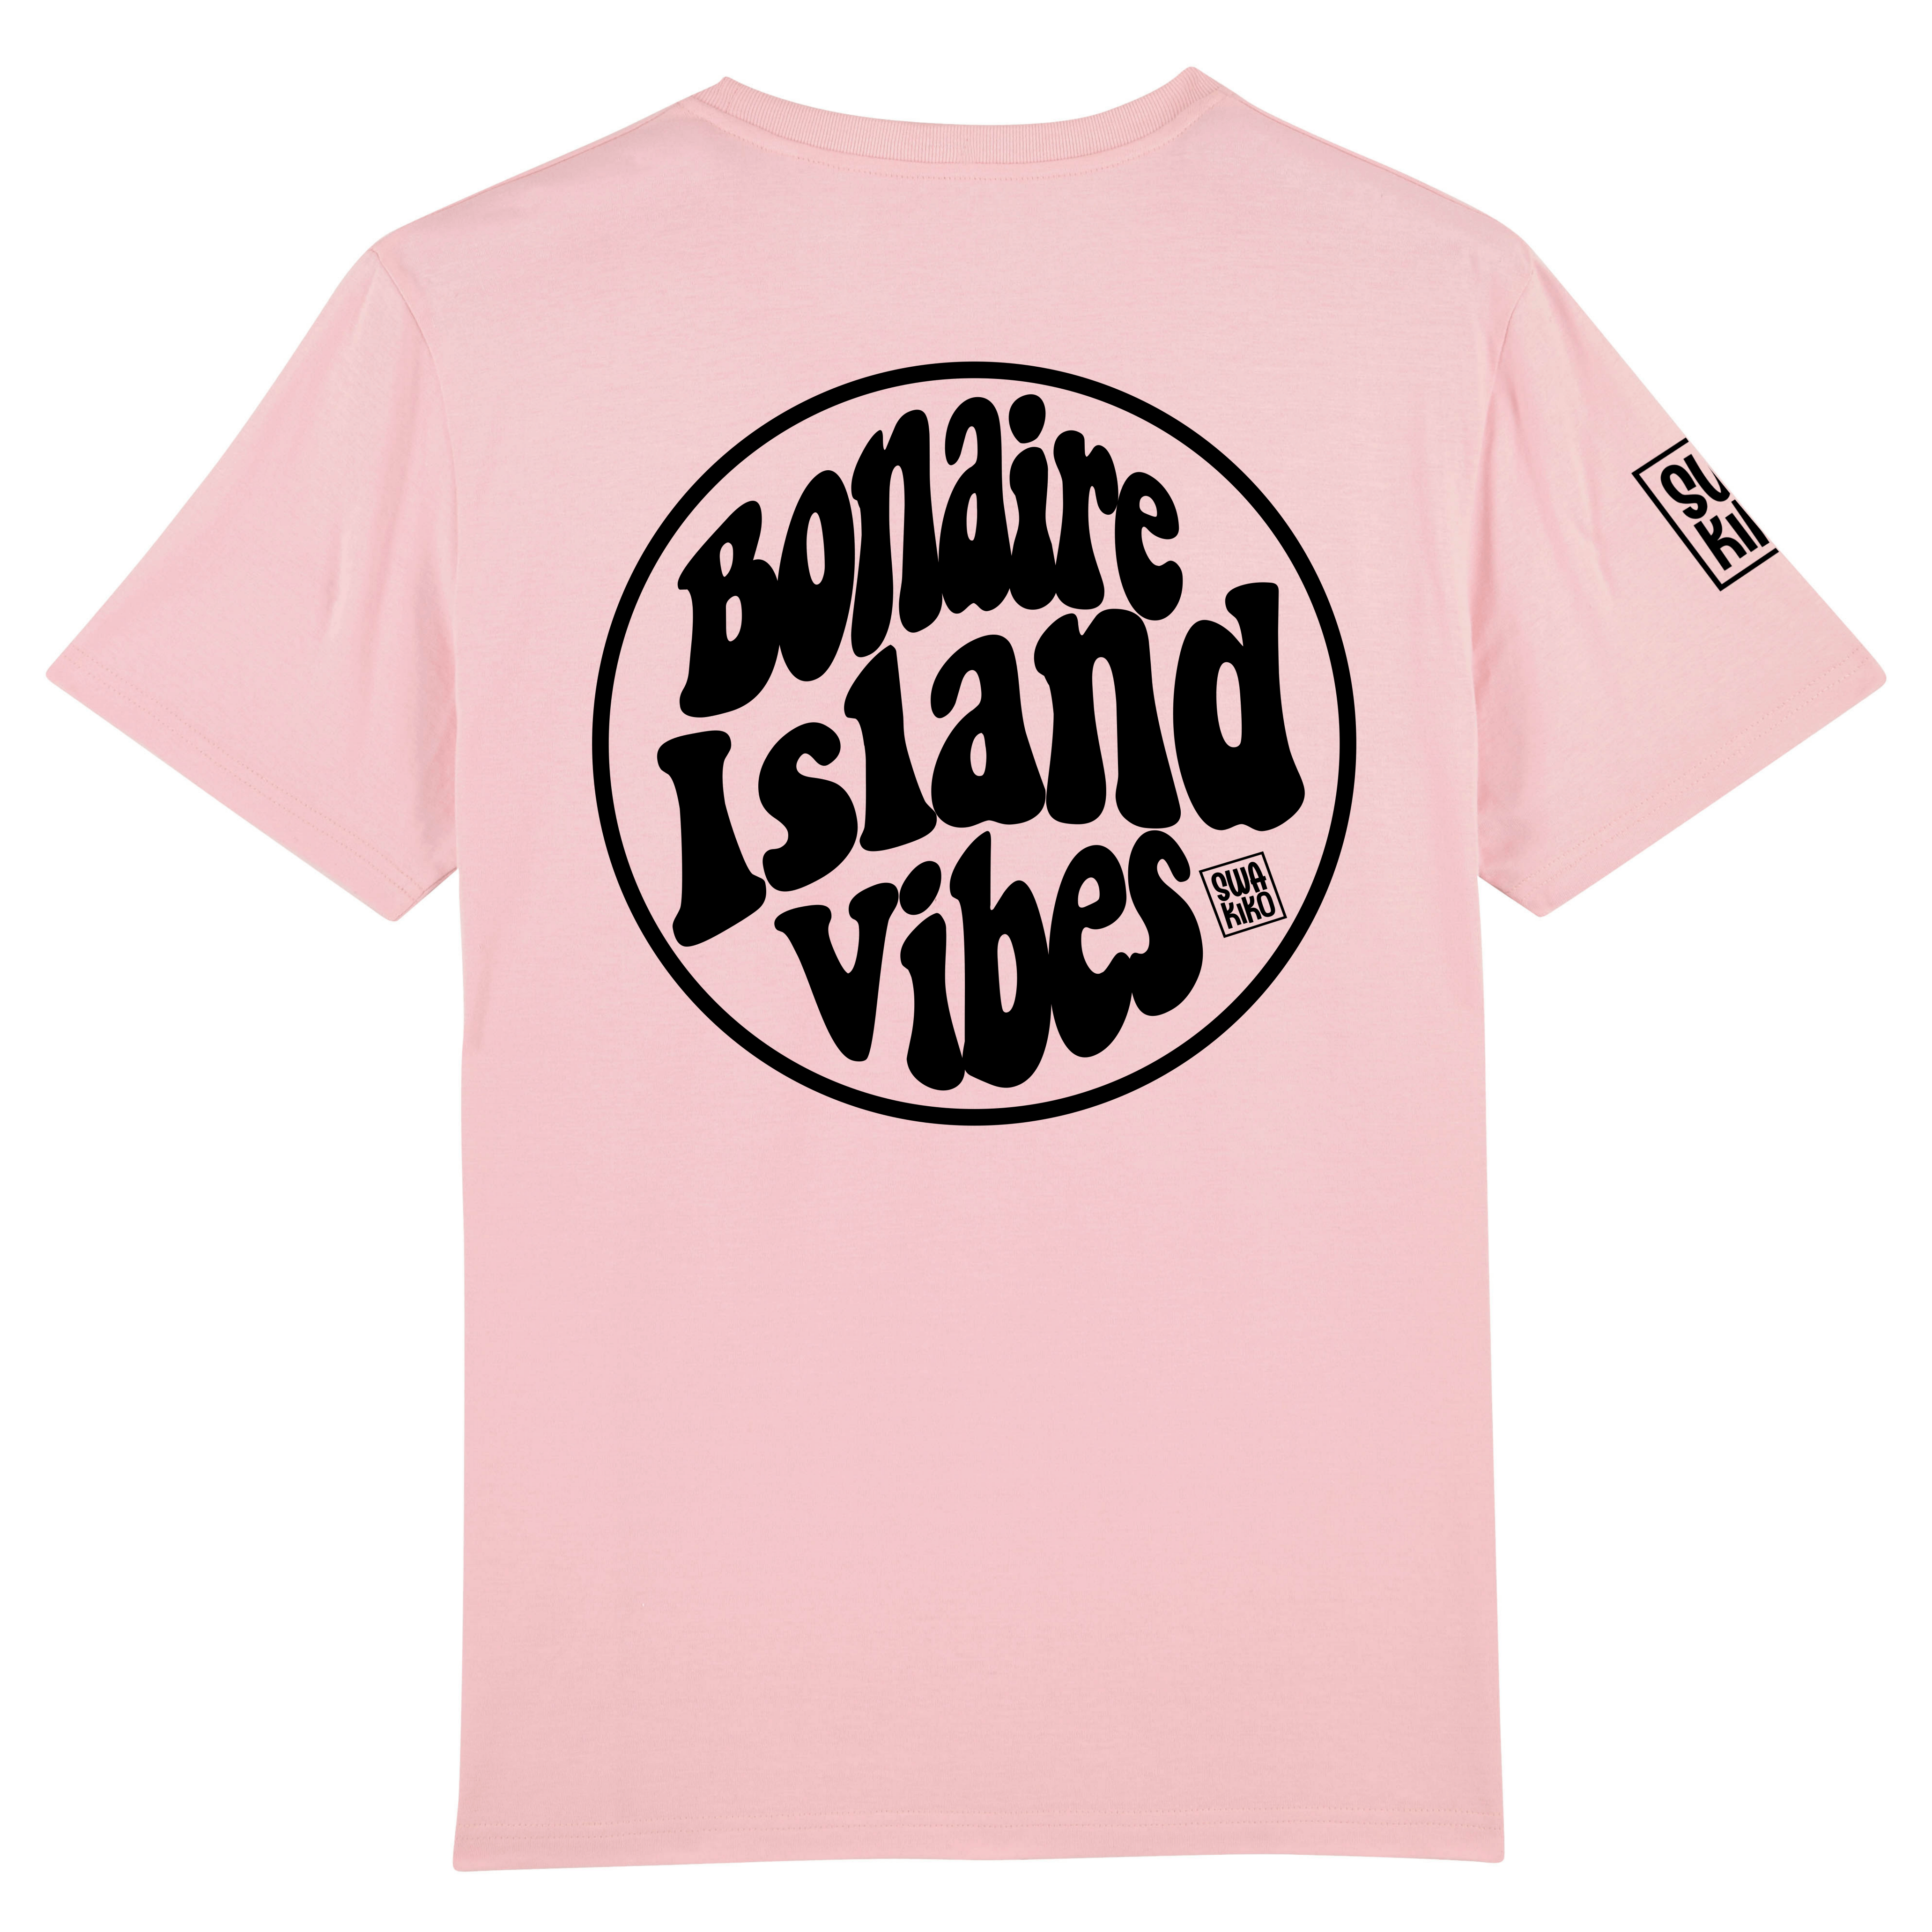 Bonaire Island Vibes logo T-shirt men, pink